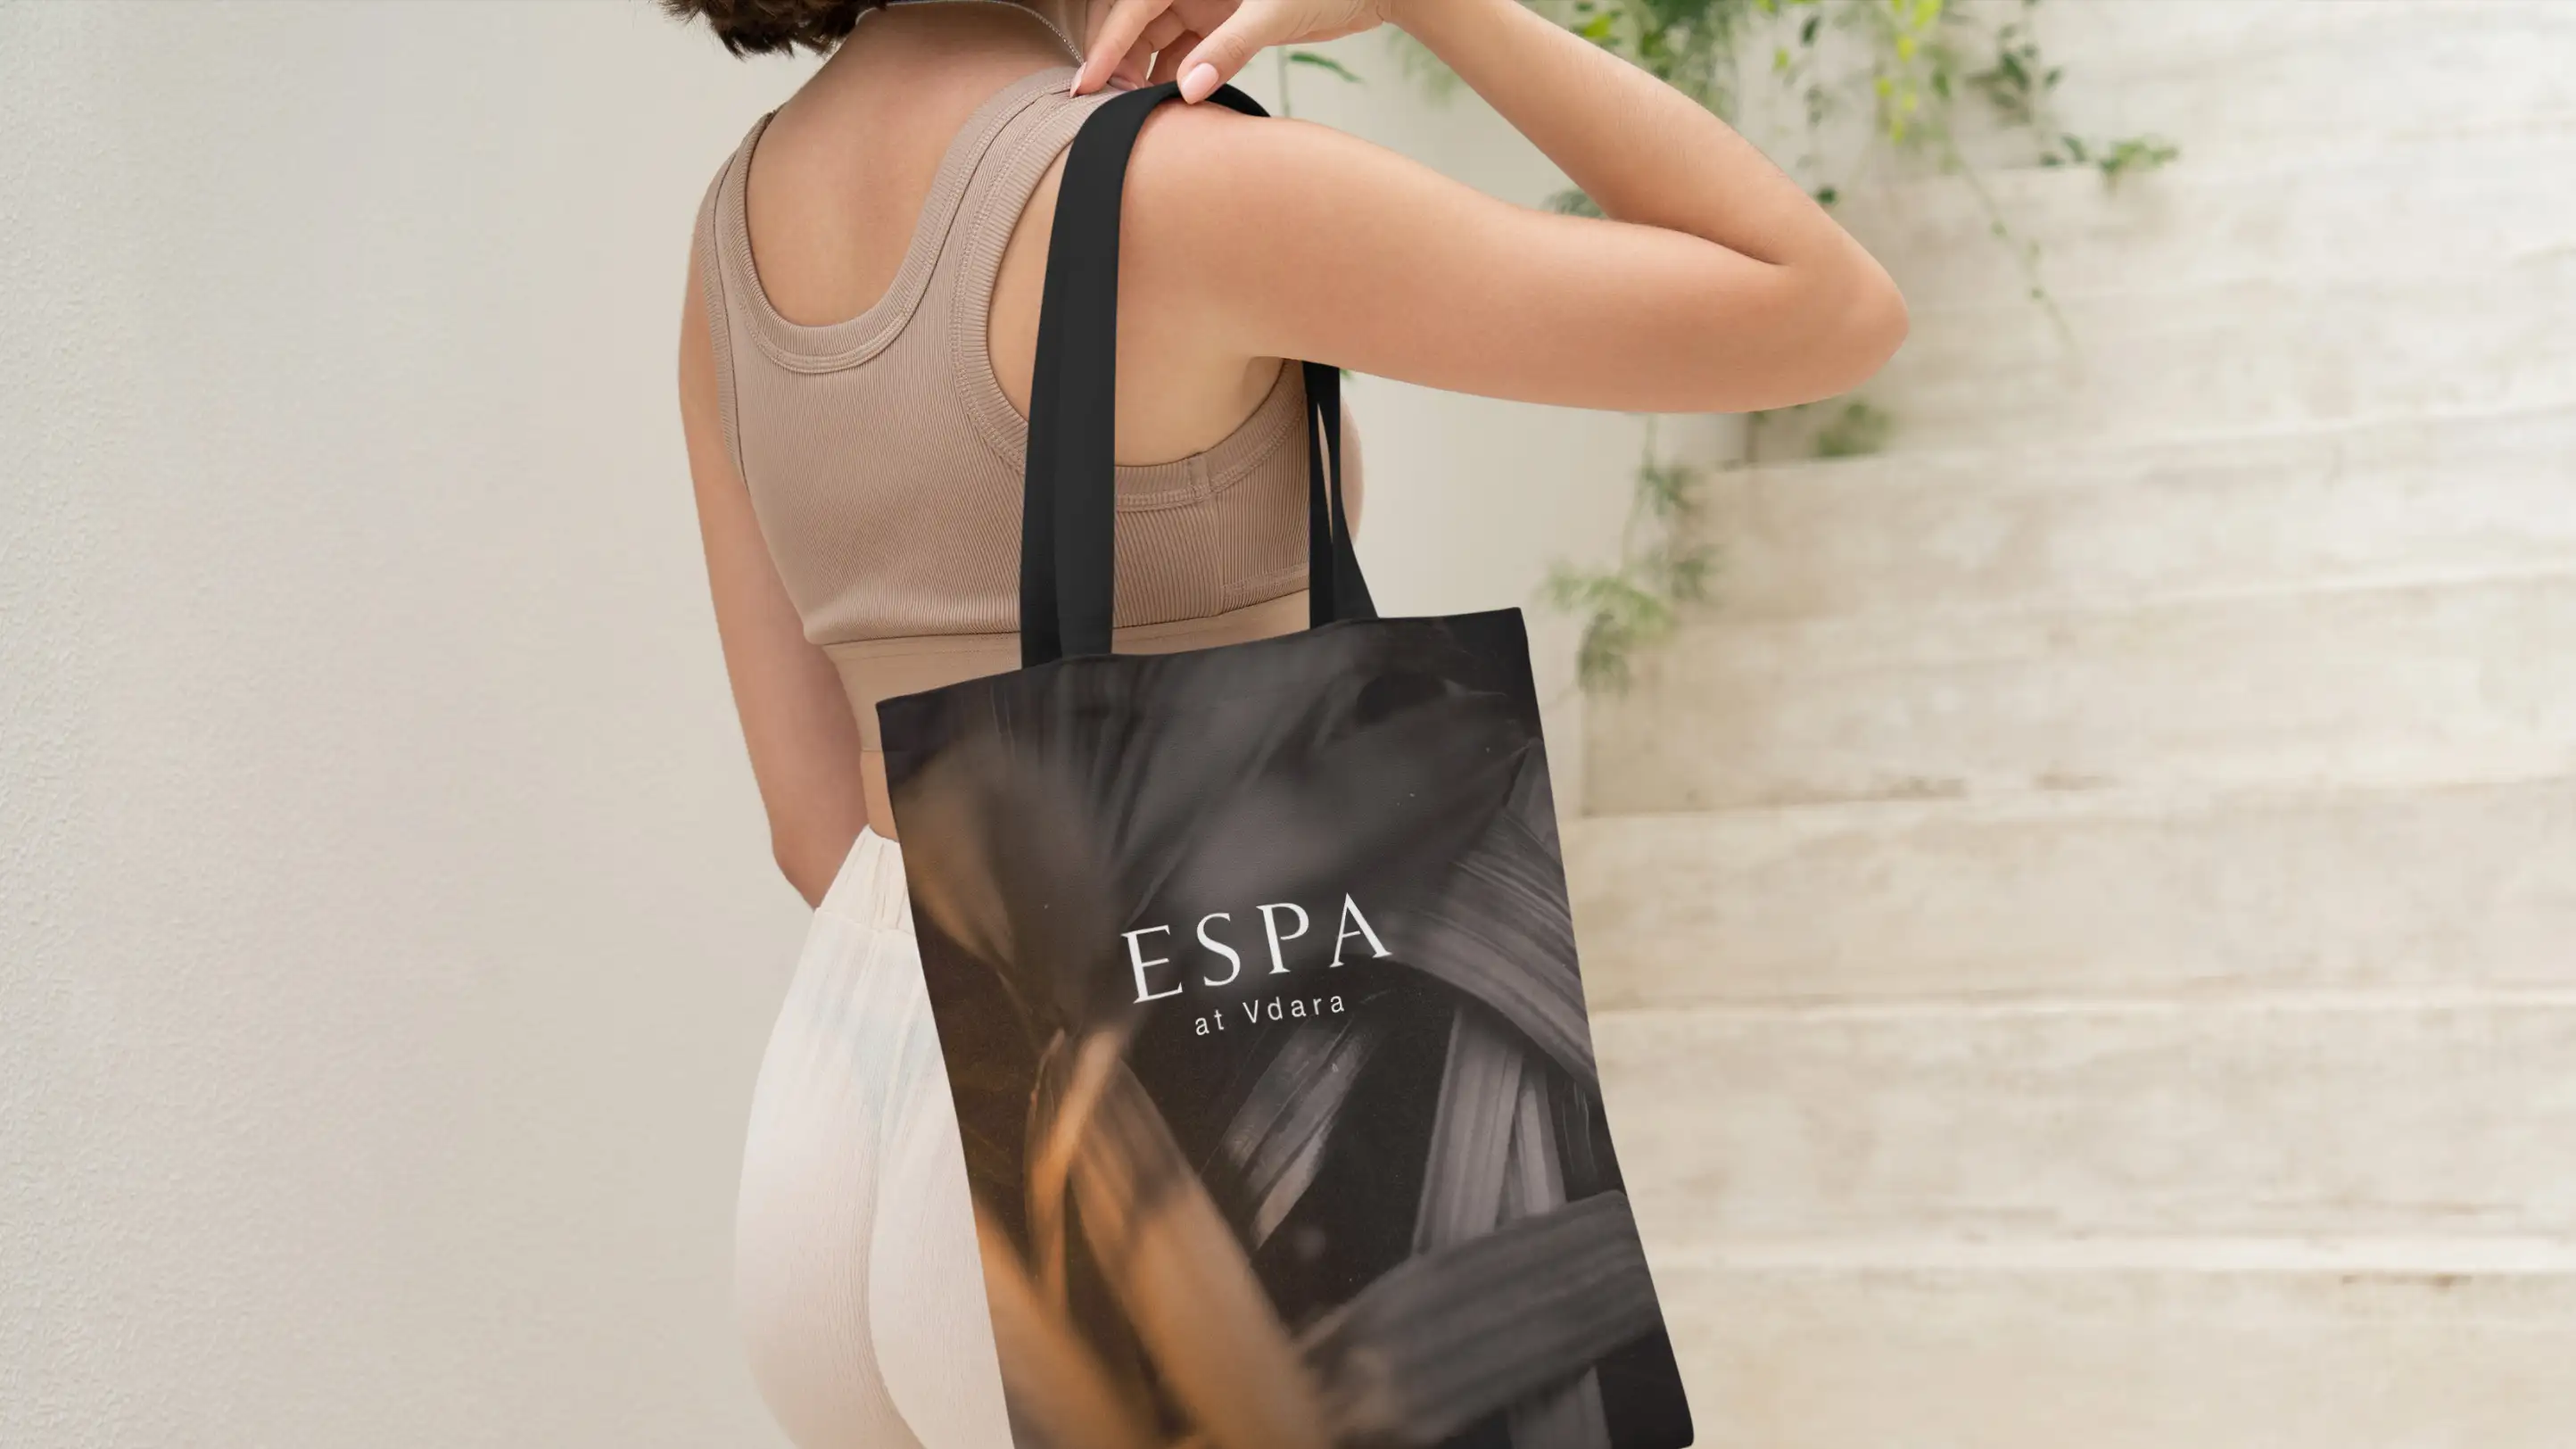 Espa at Vdara eco-conscious tote bag design.